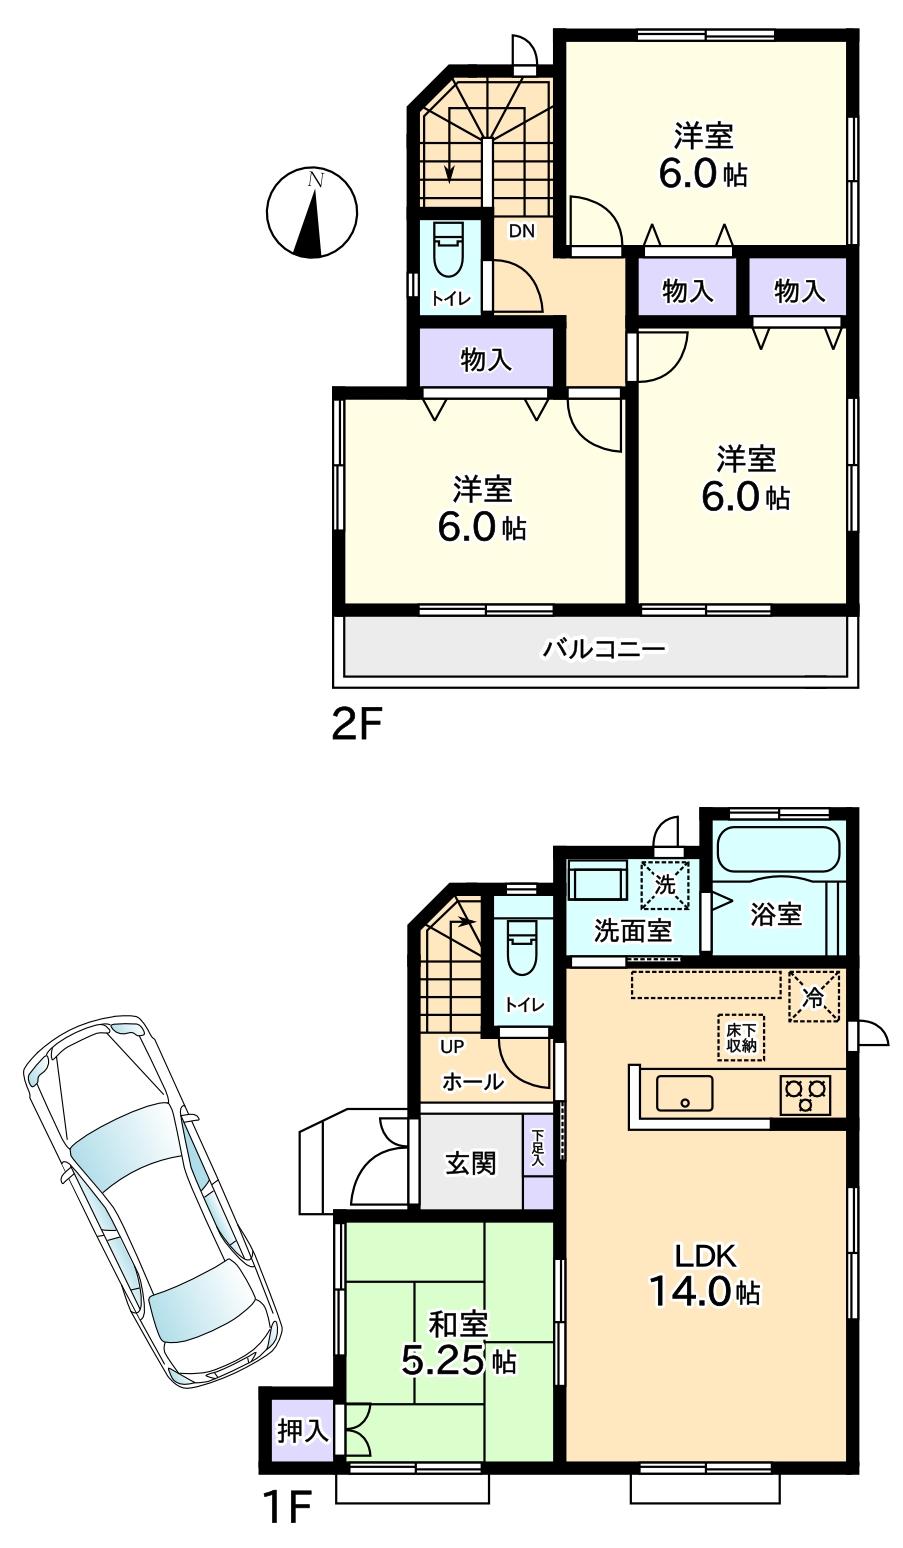 Building plan example (floor plan). Building plan example (A section) 4LDK, Land price 31,570,000 yen, Land area 100.21 sq m , Building price 10,230,000 yen, Building area 87.15 sq m